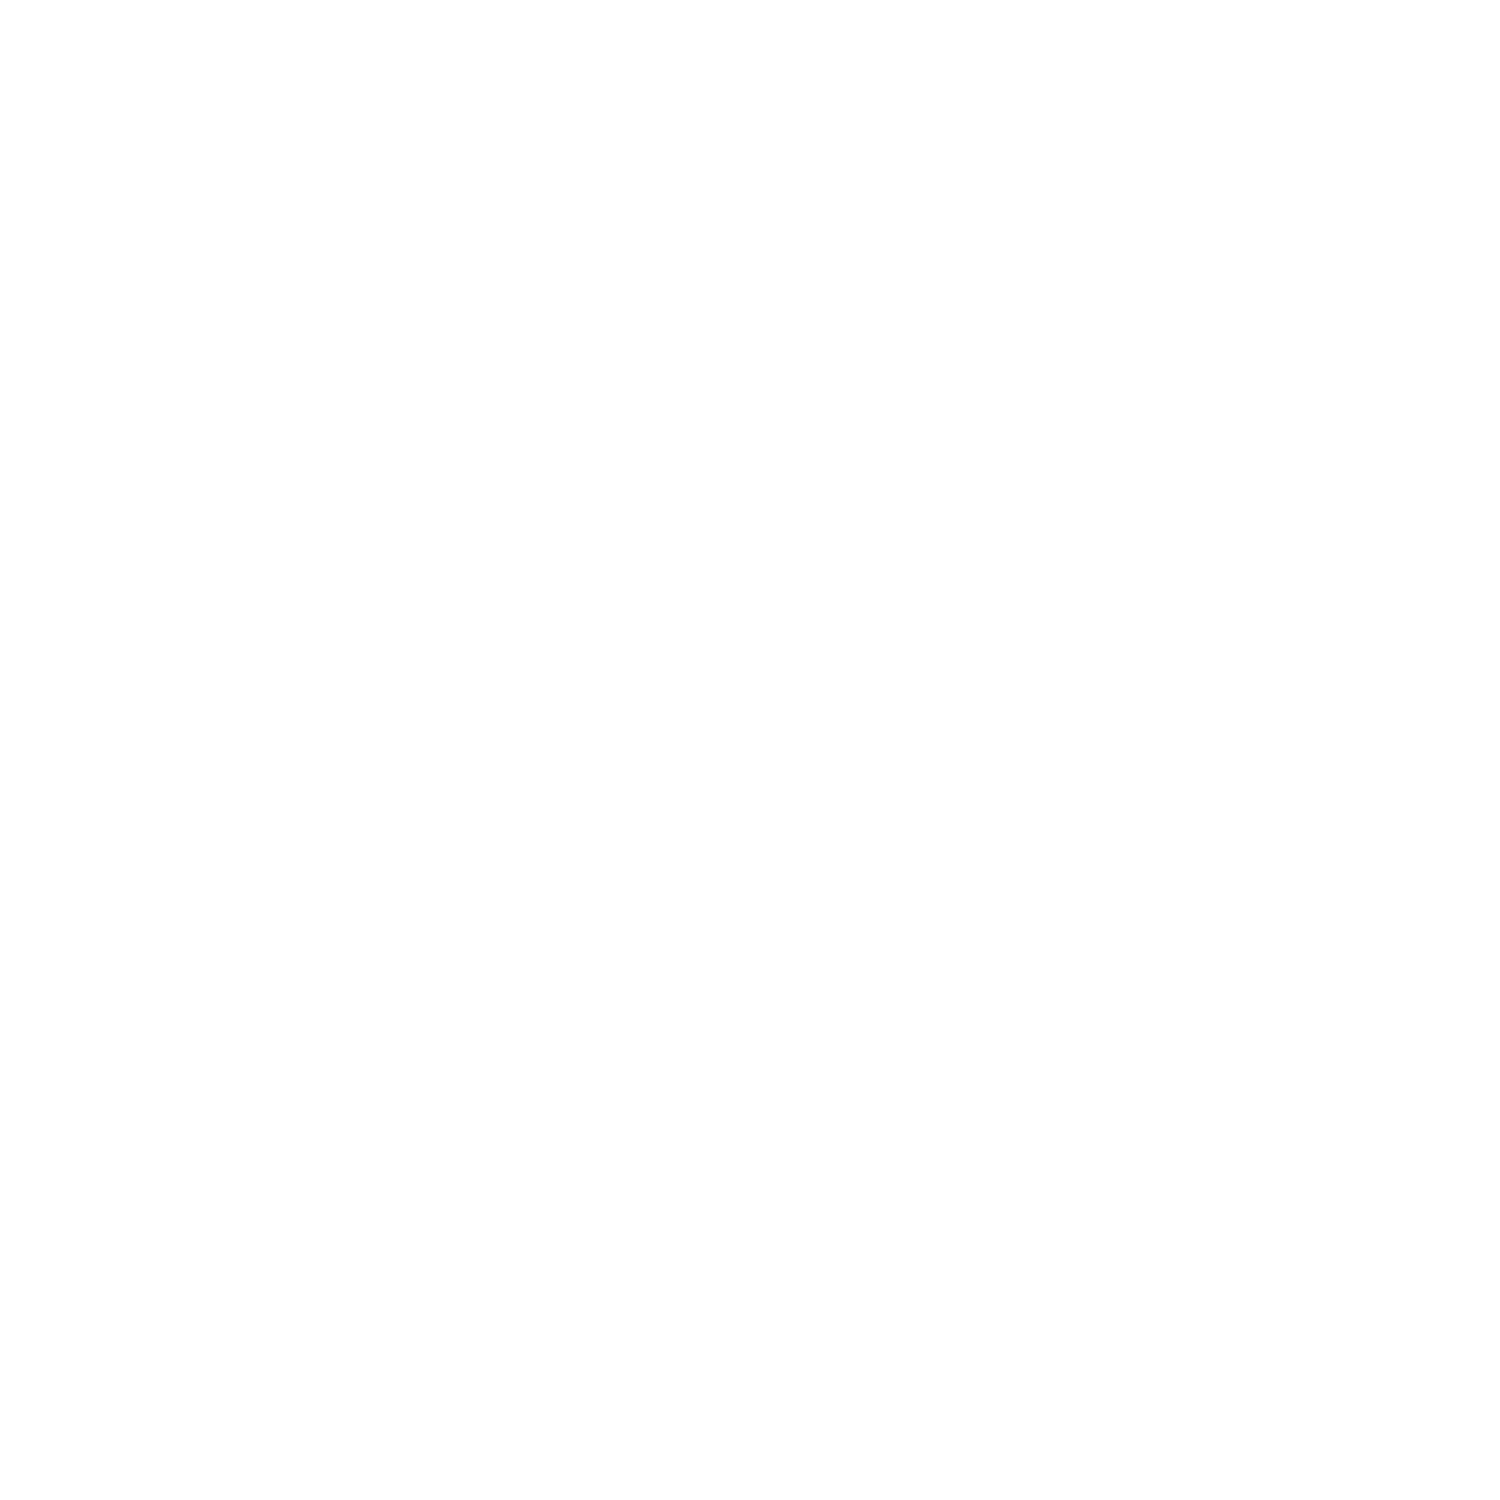 Dale Dixon Media